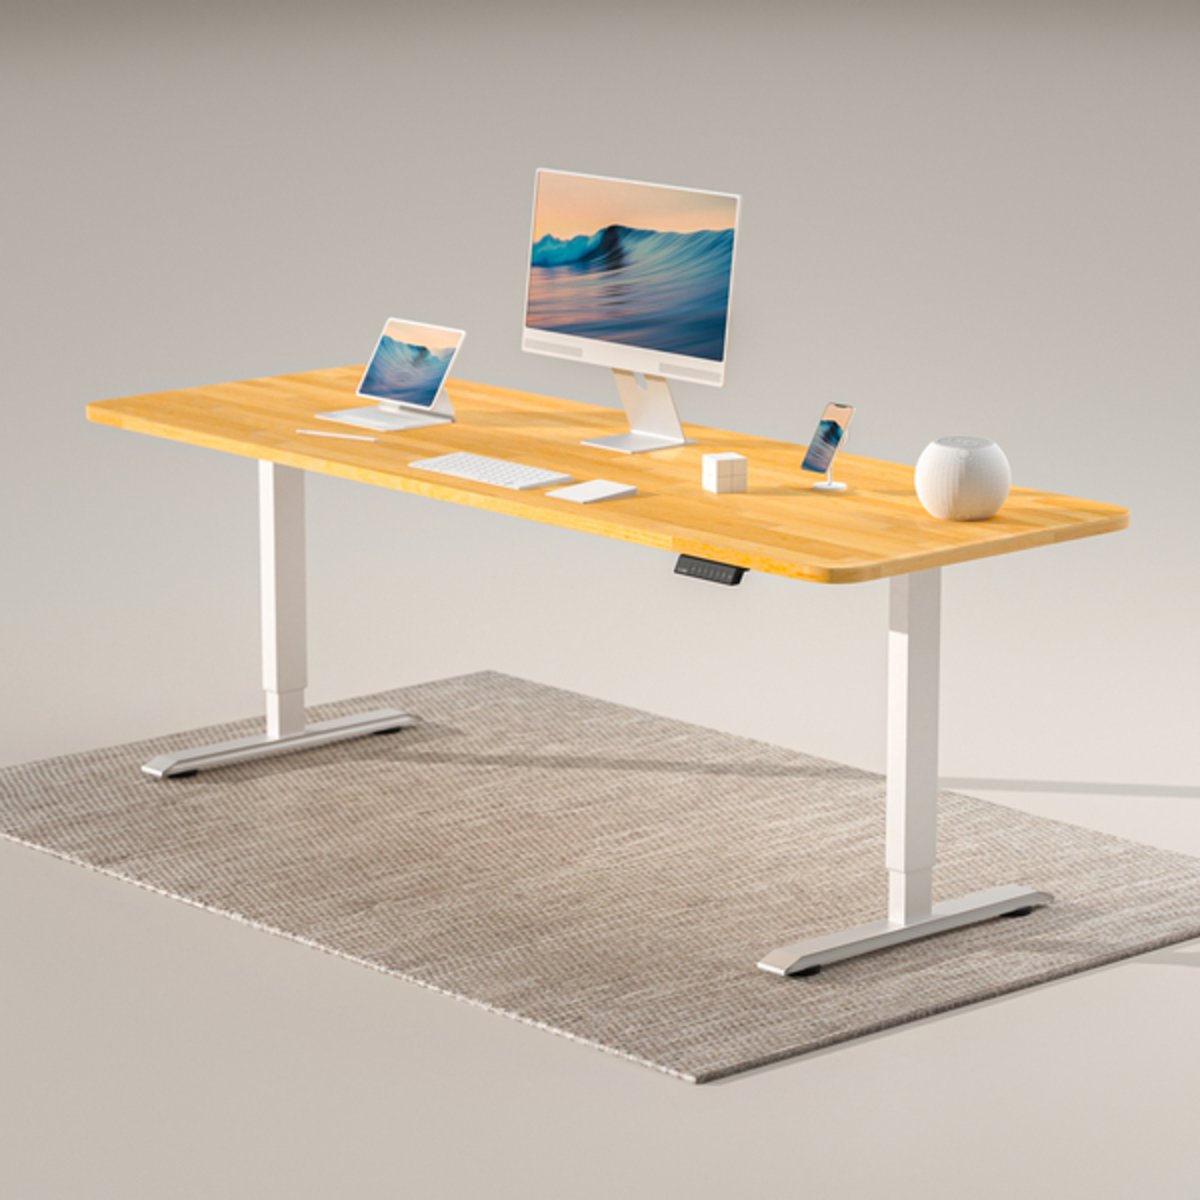 Liv Desk Ergonomic Minimalist Design Stage โต๊ะปรับระดับไฟฟ้า  มอเตอร์คู่ ไม้แท้ สีน้ำตาลอ่อน 180x80cm. ไม้สีน้ำตาลอ่อน+ขาขาว 180x80cm.  ไม้สีน้ำตาลอ่อน+ขาขาว